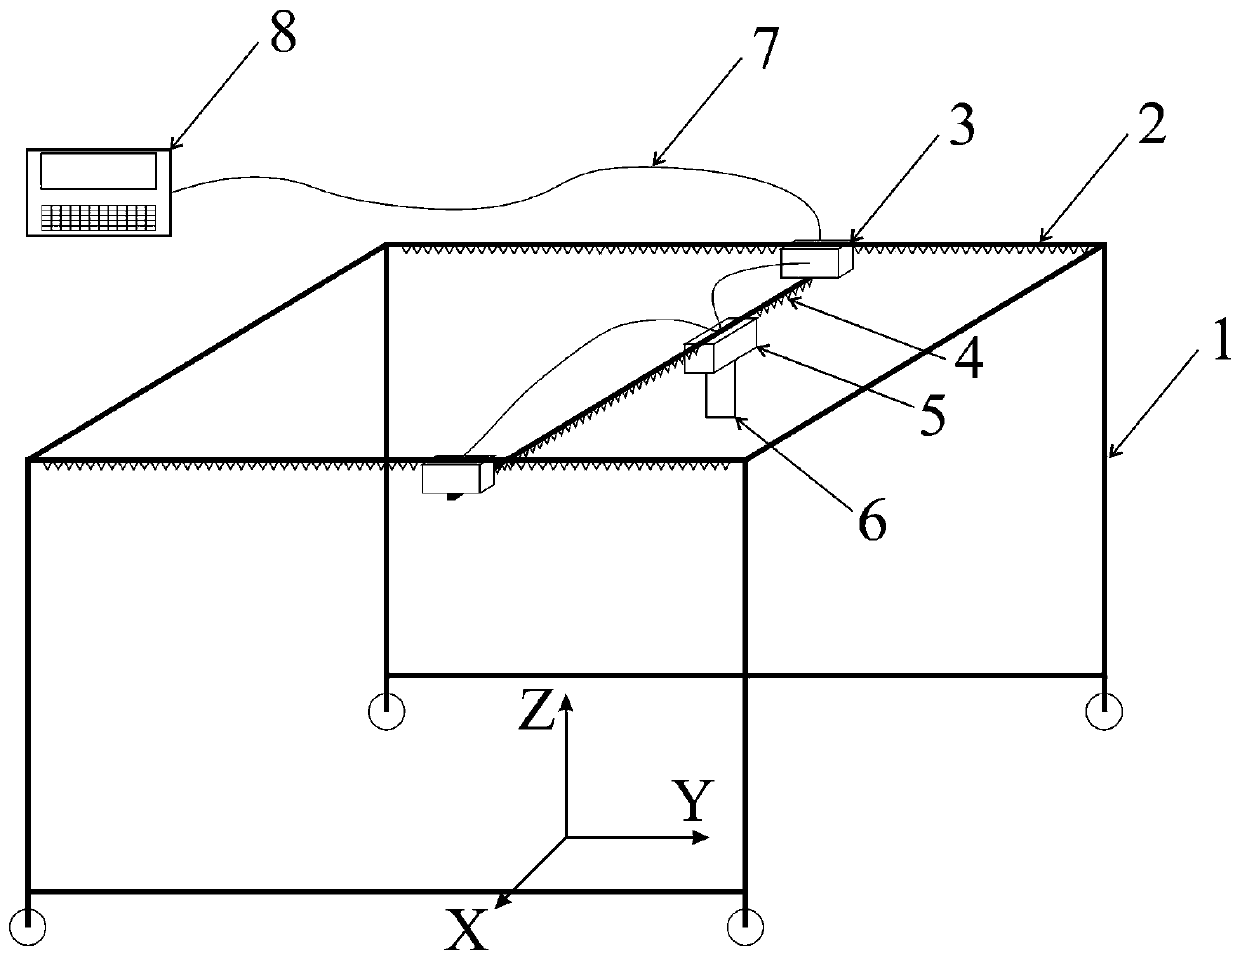 Verification device and method for simulating concrete slump form by discrete elements